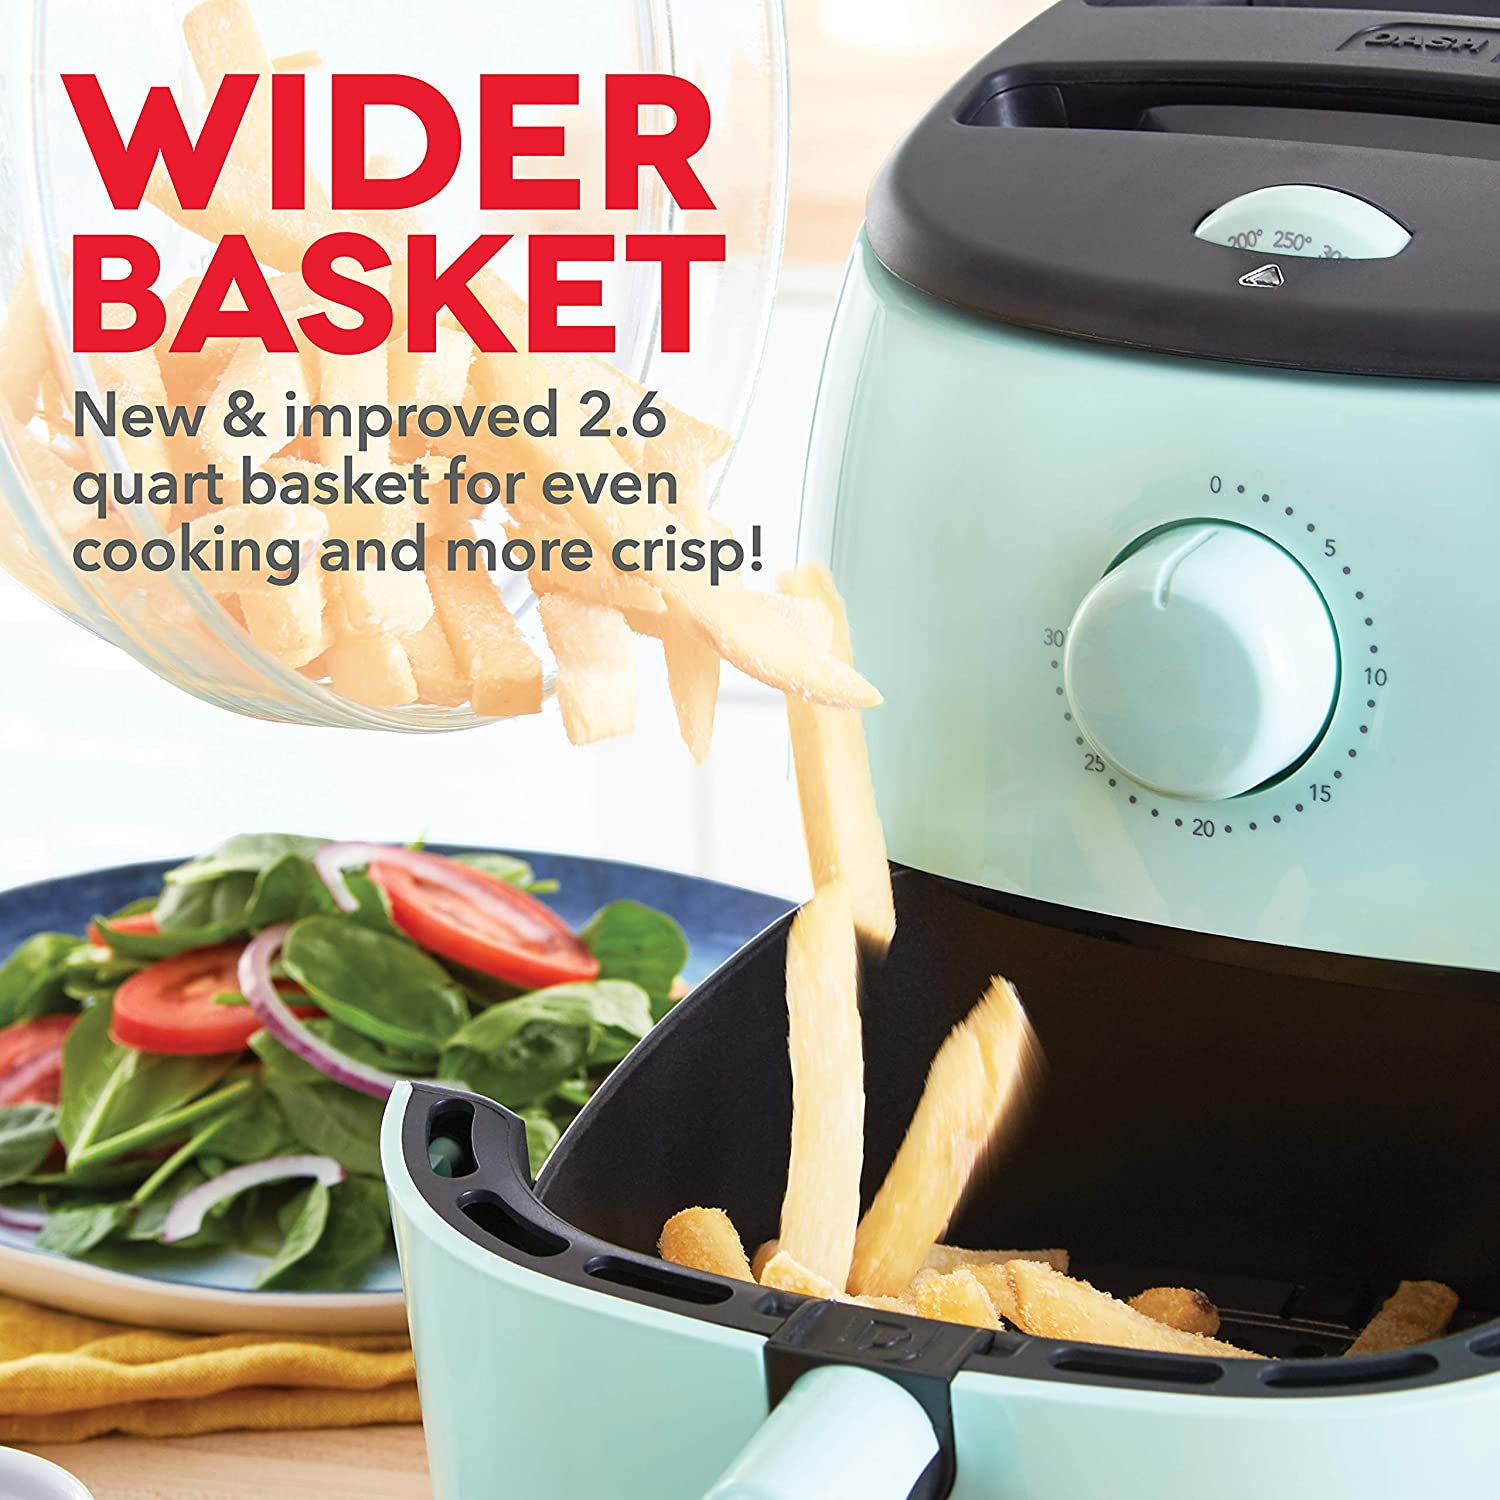 DASH Compact Air Fryer Oven Cooker with Temperature Control, Non-stick Fry  Basket, Recipe Guide + Auto Shut off Feature, 2 Quart - Aqua